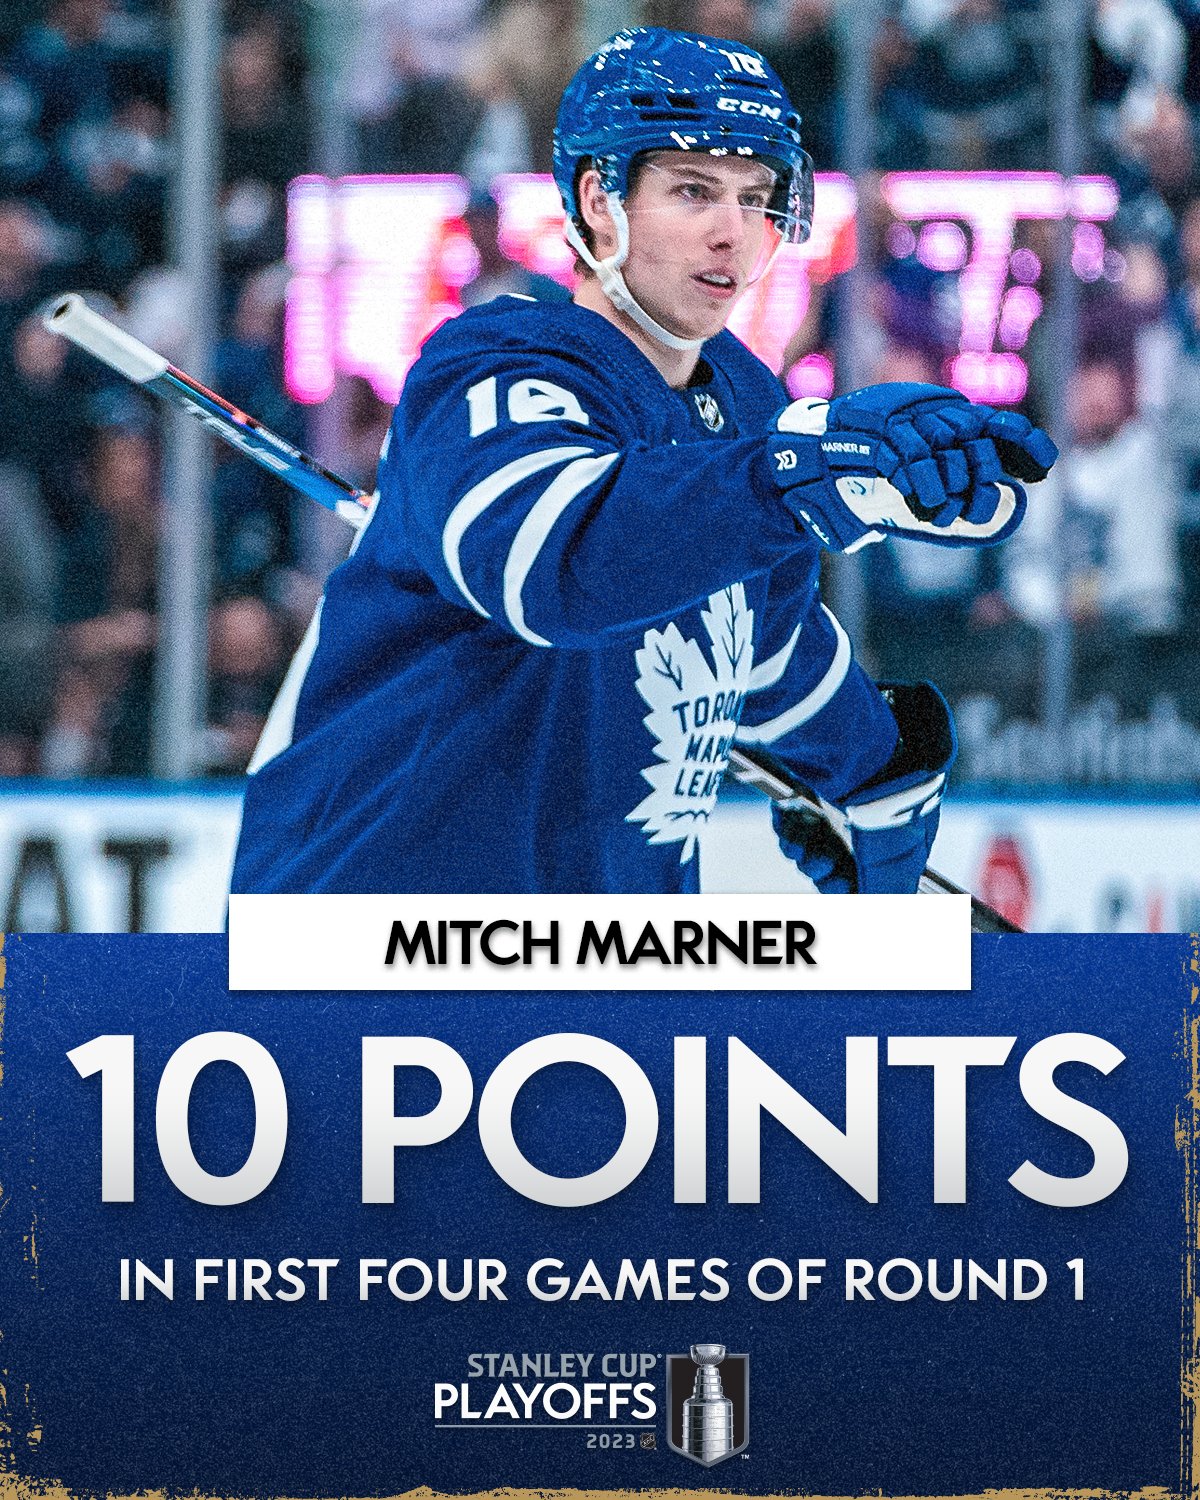 NHL Toronto Maple Leafs - Mitch Marner 19 Poster